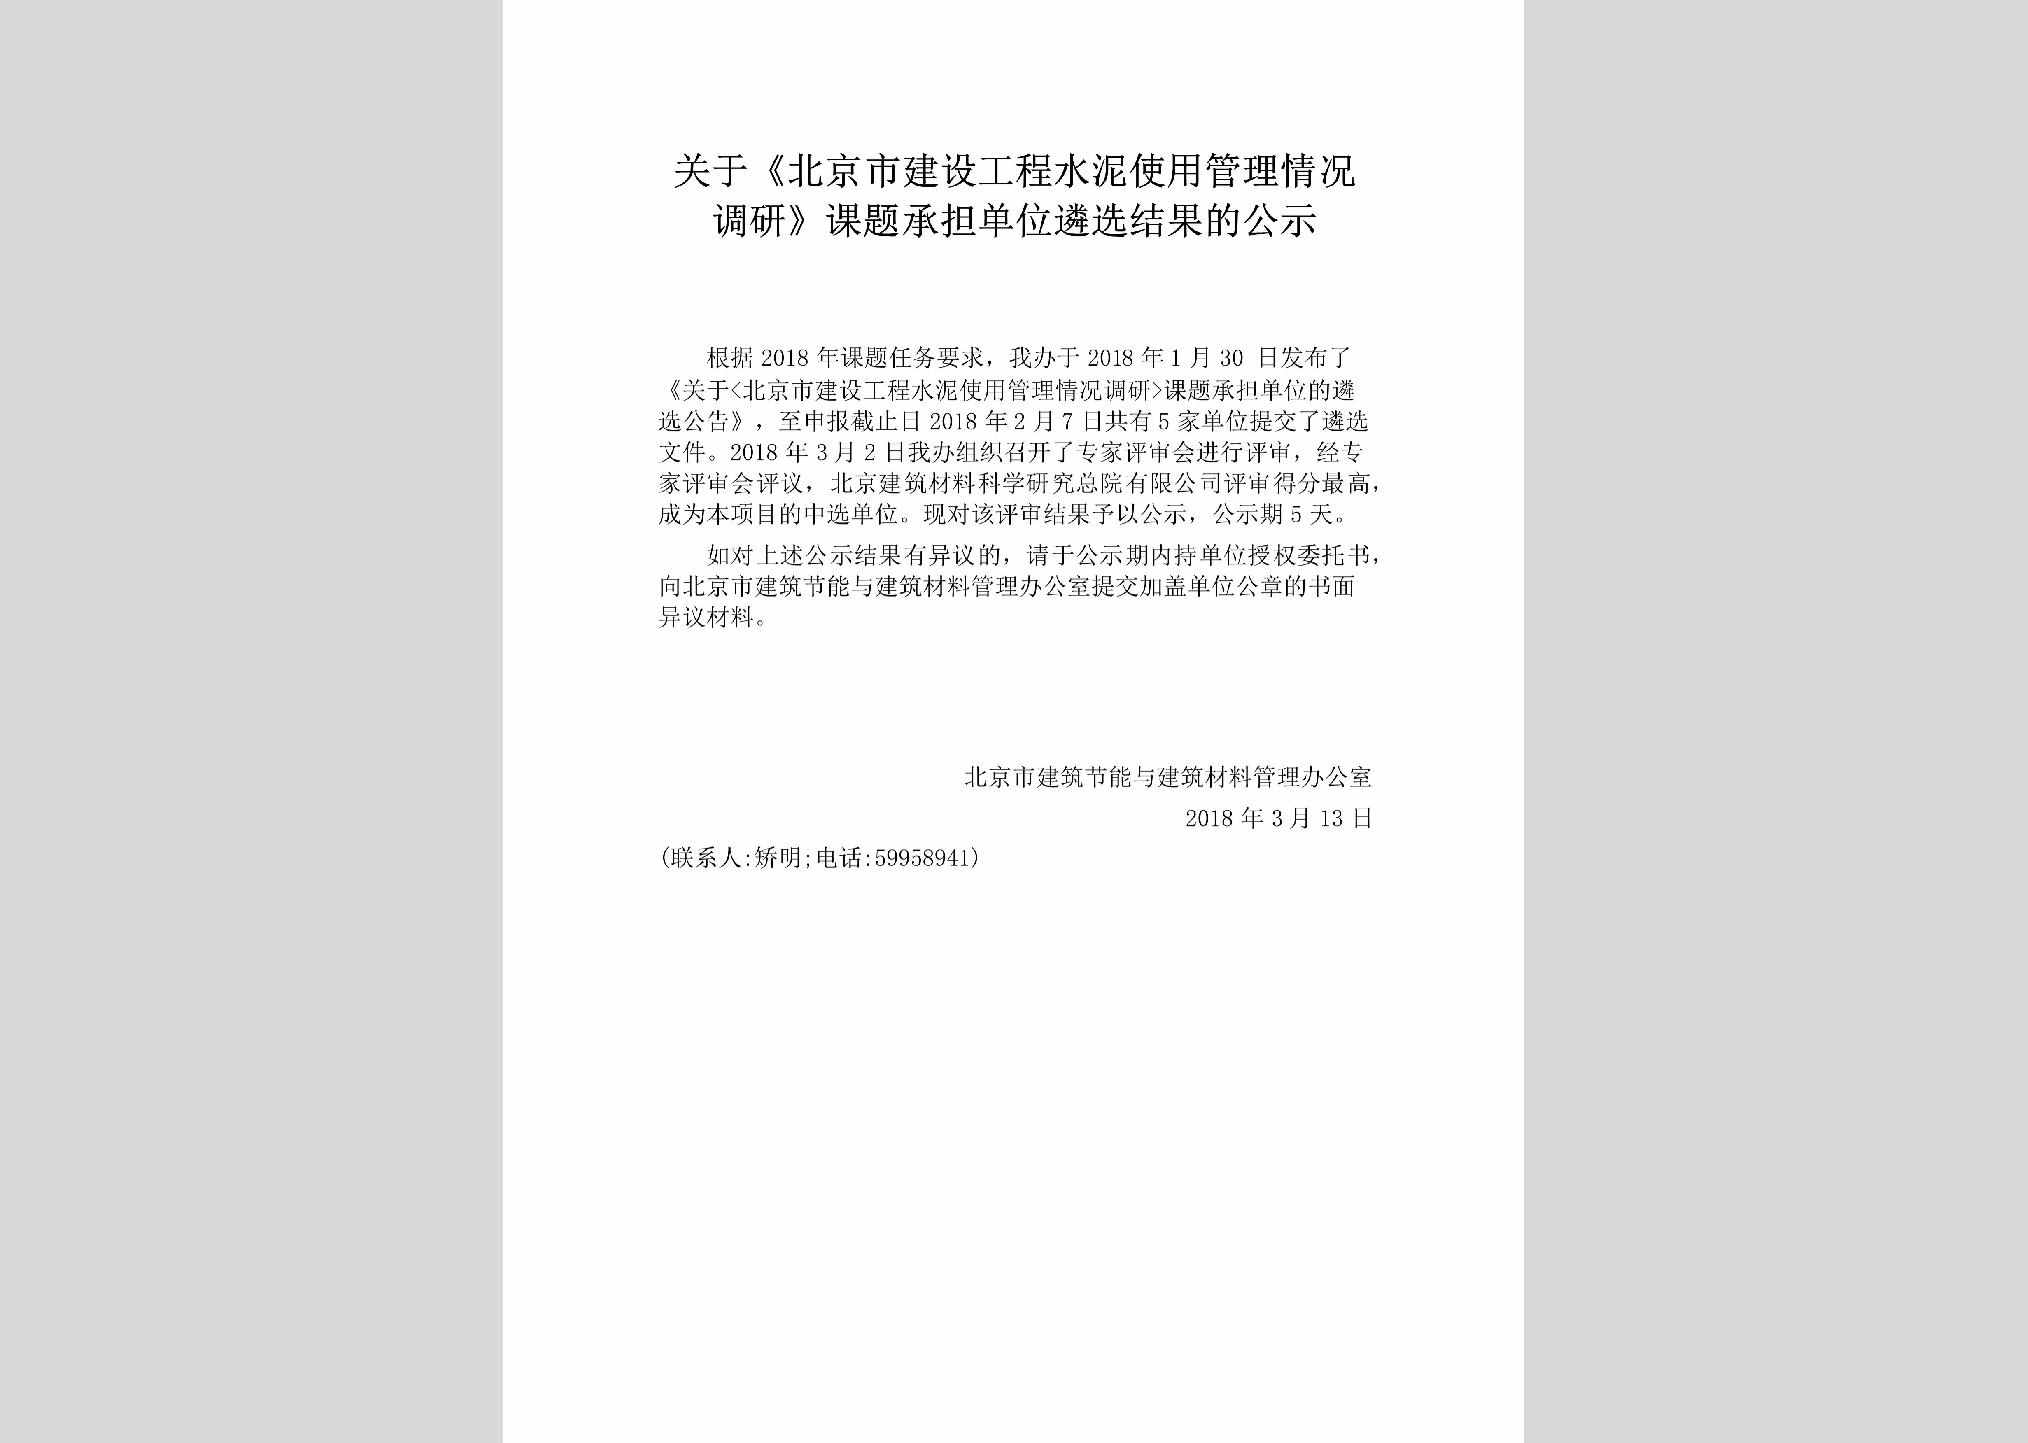 BJ-JSGCSNGS-2018：关于《北京市建设工程水泥使用管理情况调研》课题承担单位遴选结果的公示